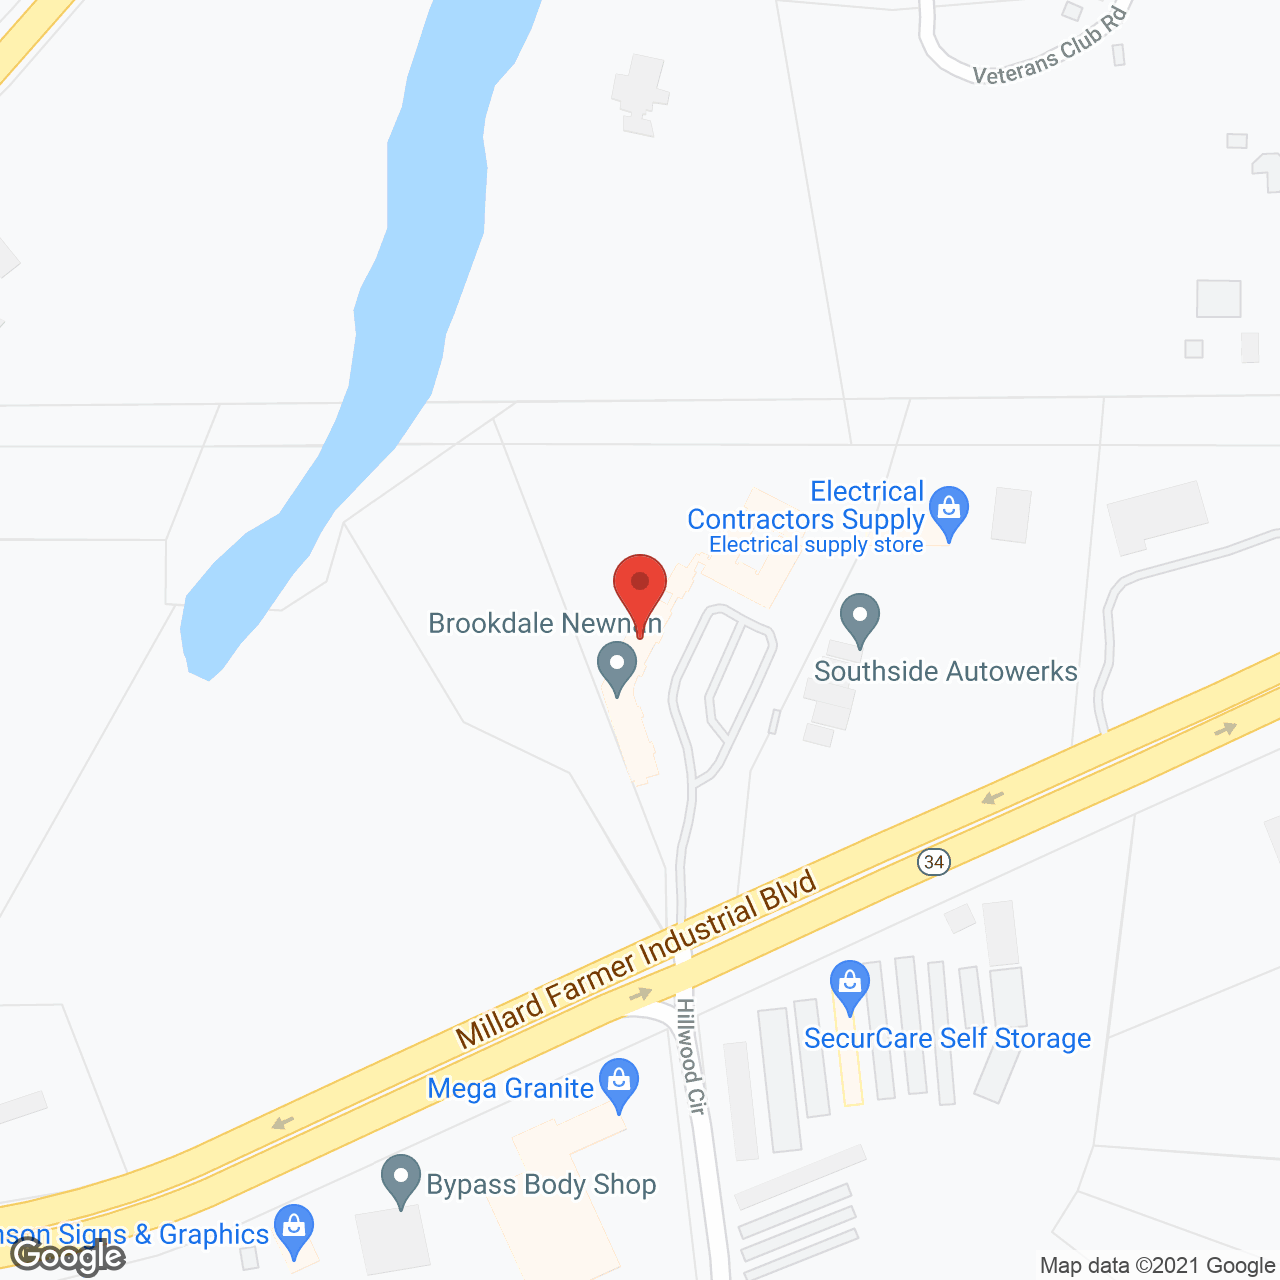 Brookdale Newnan in google map